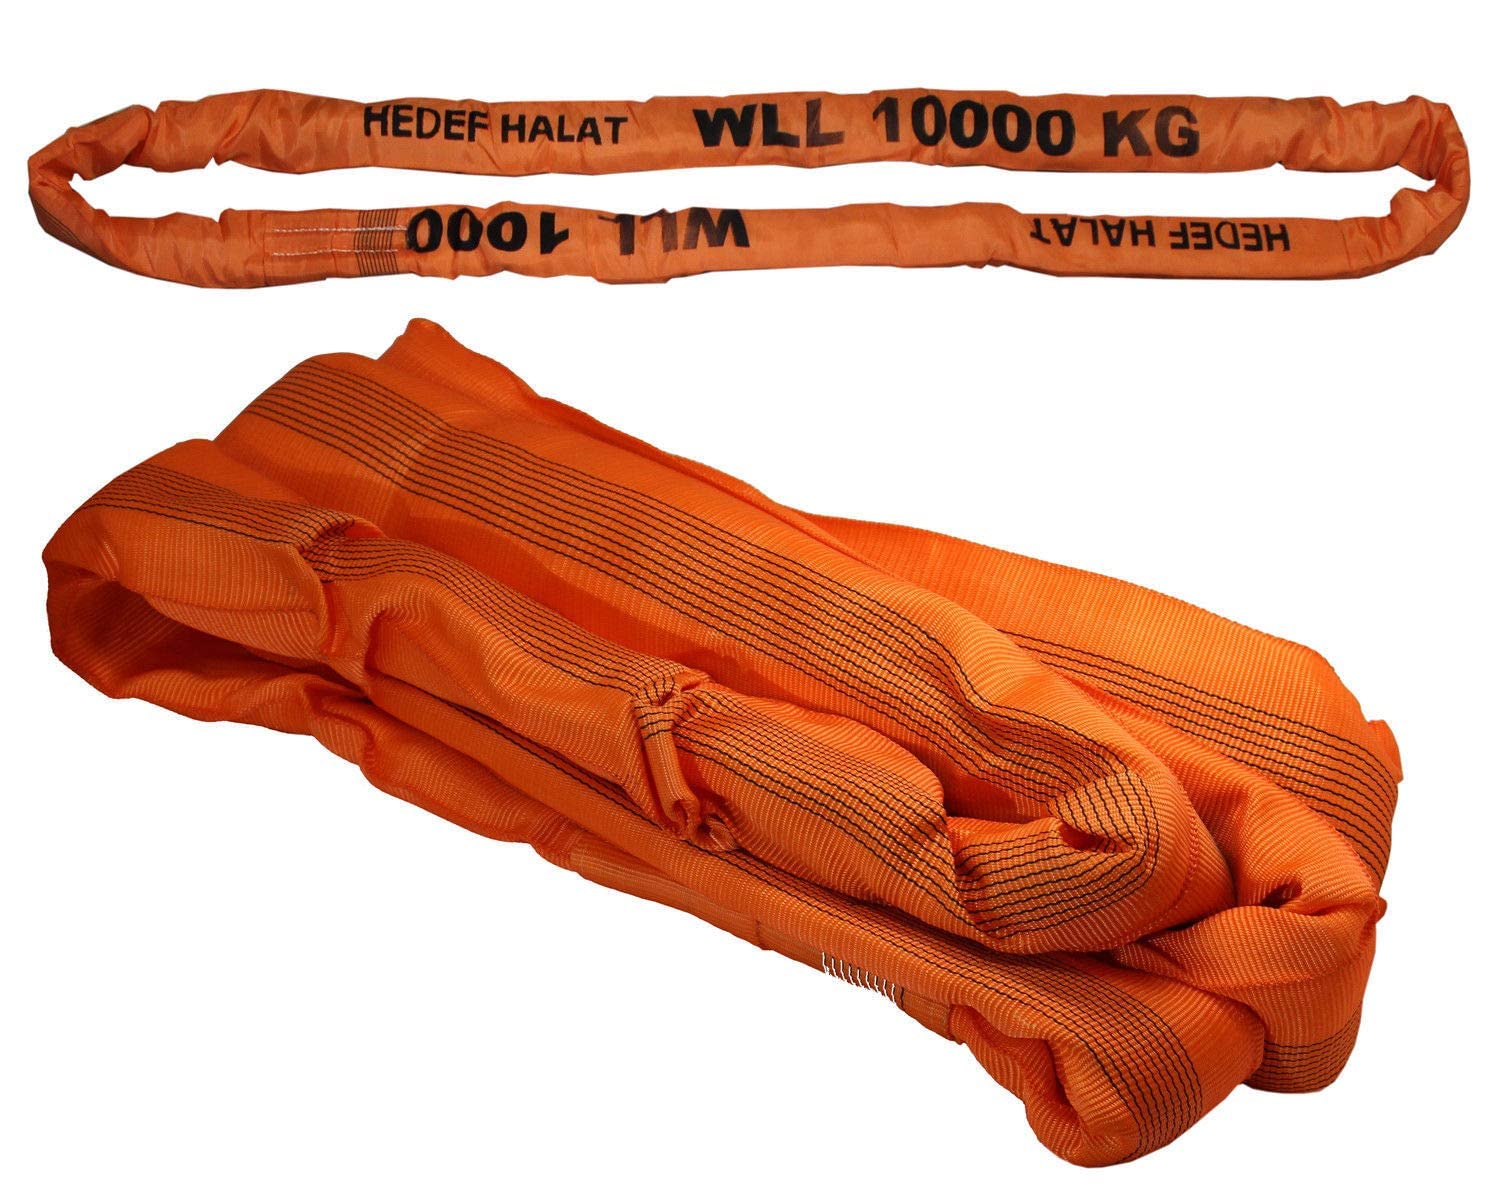 Rundschlinge 10000kg Tragkraft, 8m Umfang, endlos mit Polyesterkern, Hebegurt Hebeband, Orange von Hedef